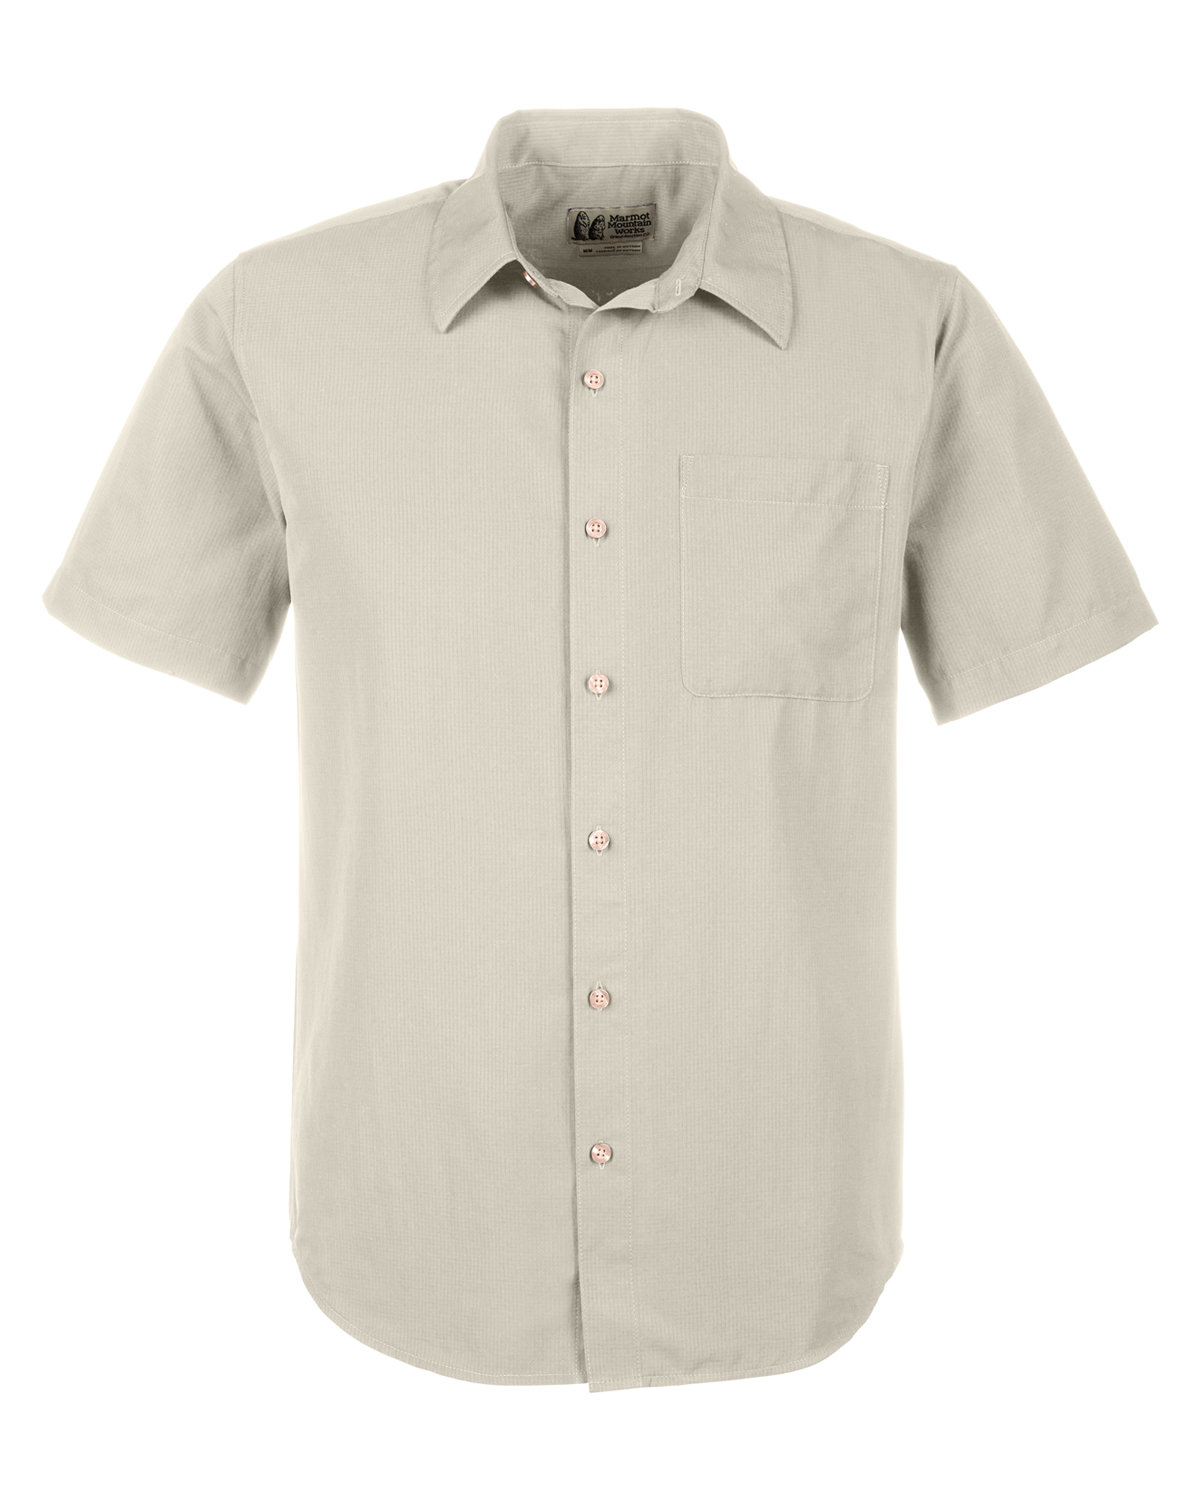 Marmot M14116 - Men's Aerobora Short-Sleeve Woven Shirt